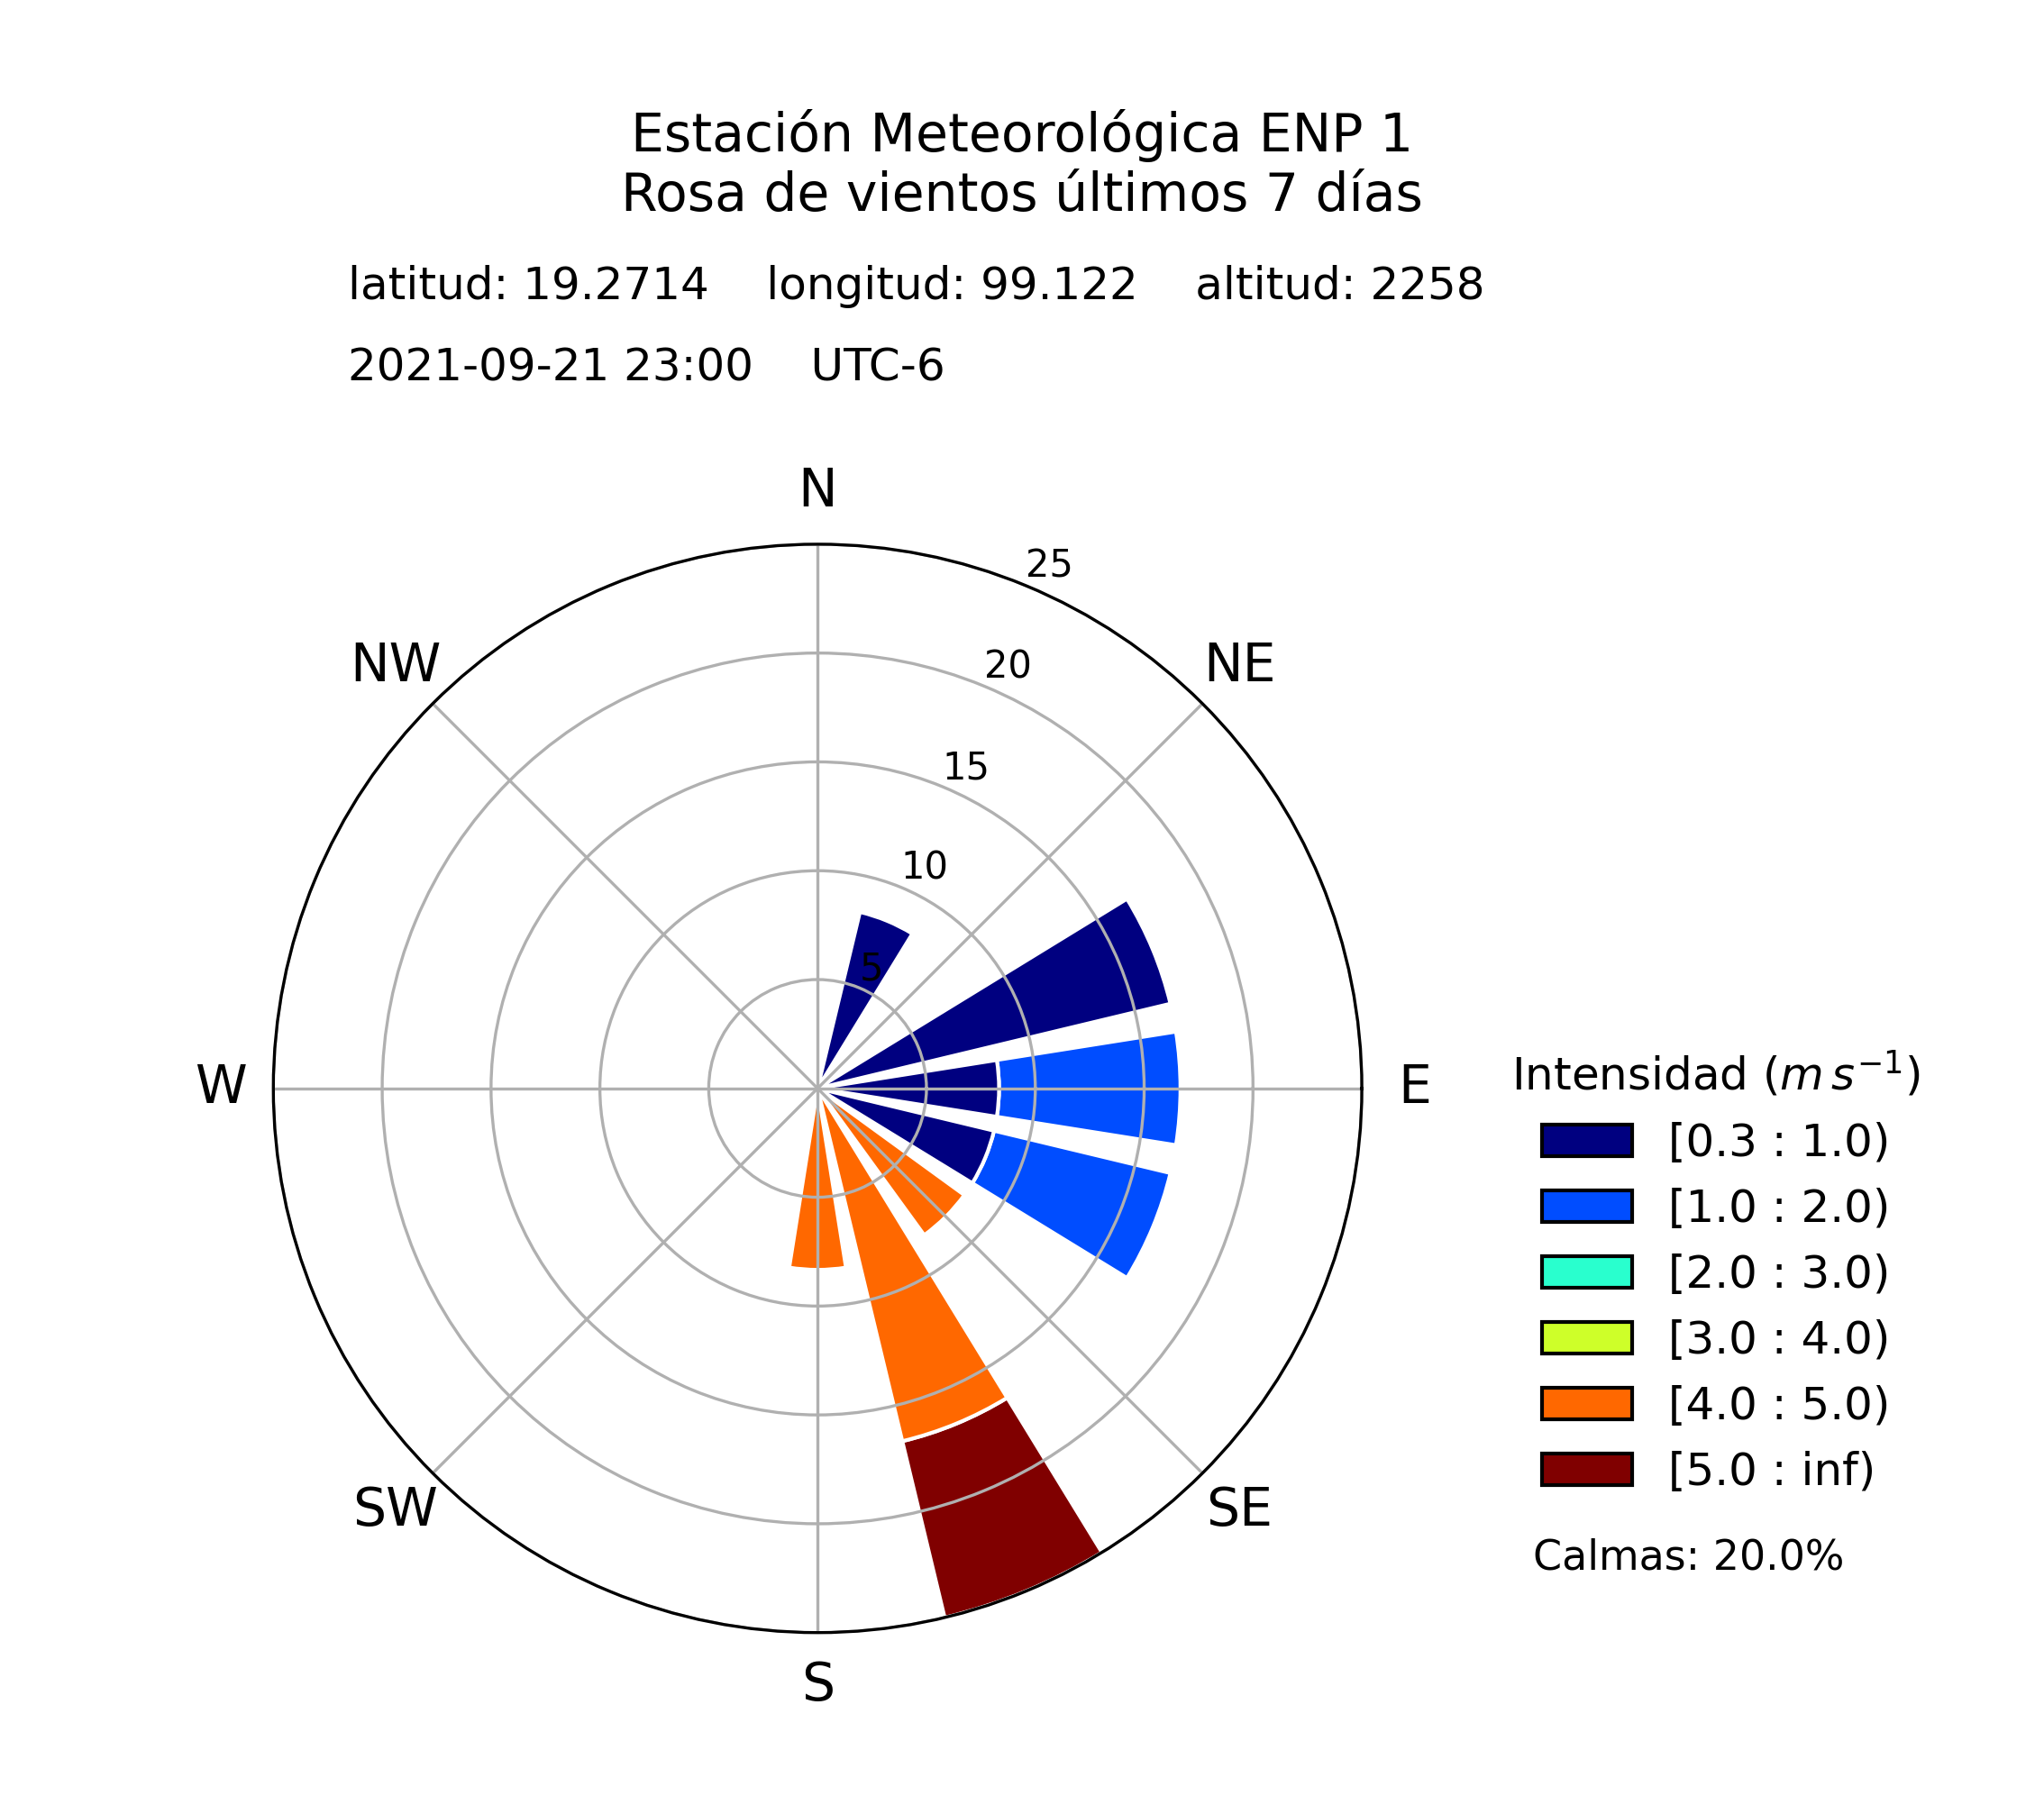 vientos últimos 7 días ENP1